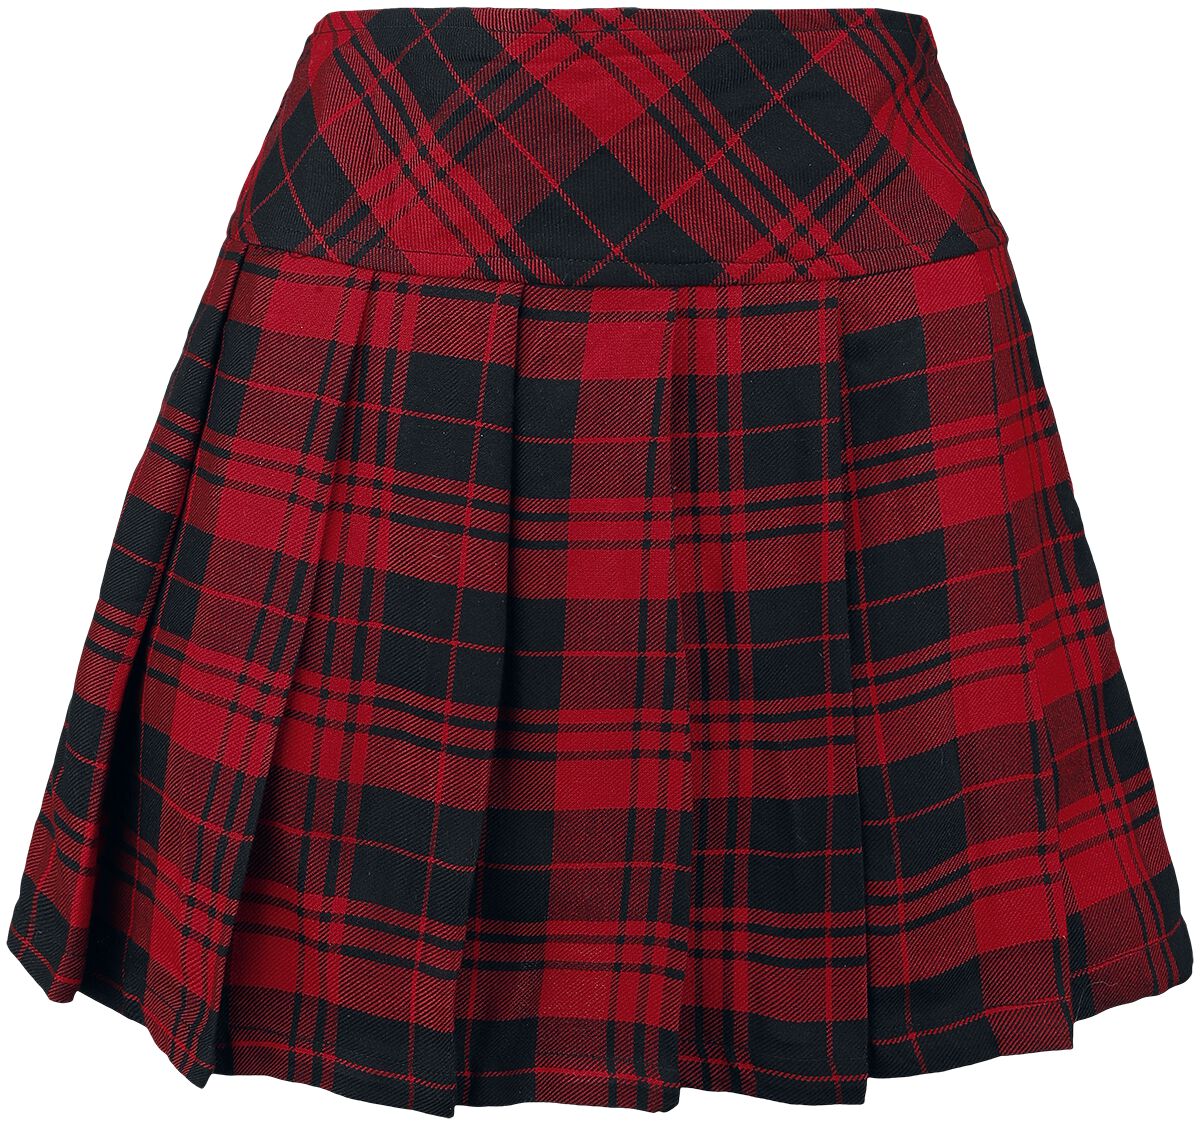 Heartless Zorya Skirt Kurzer Rock rot schwarz in L